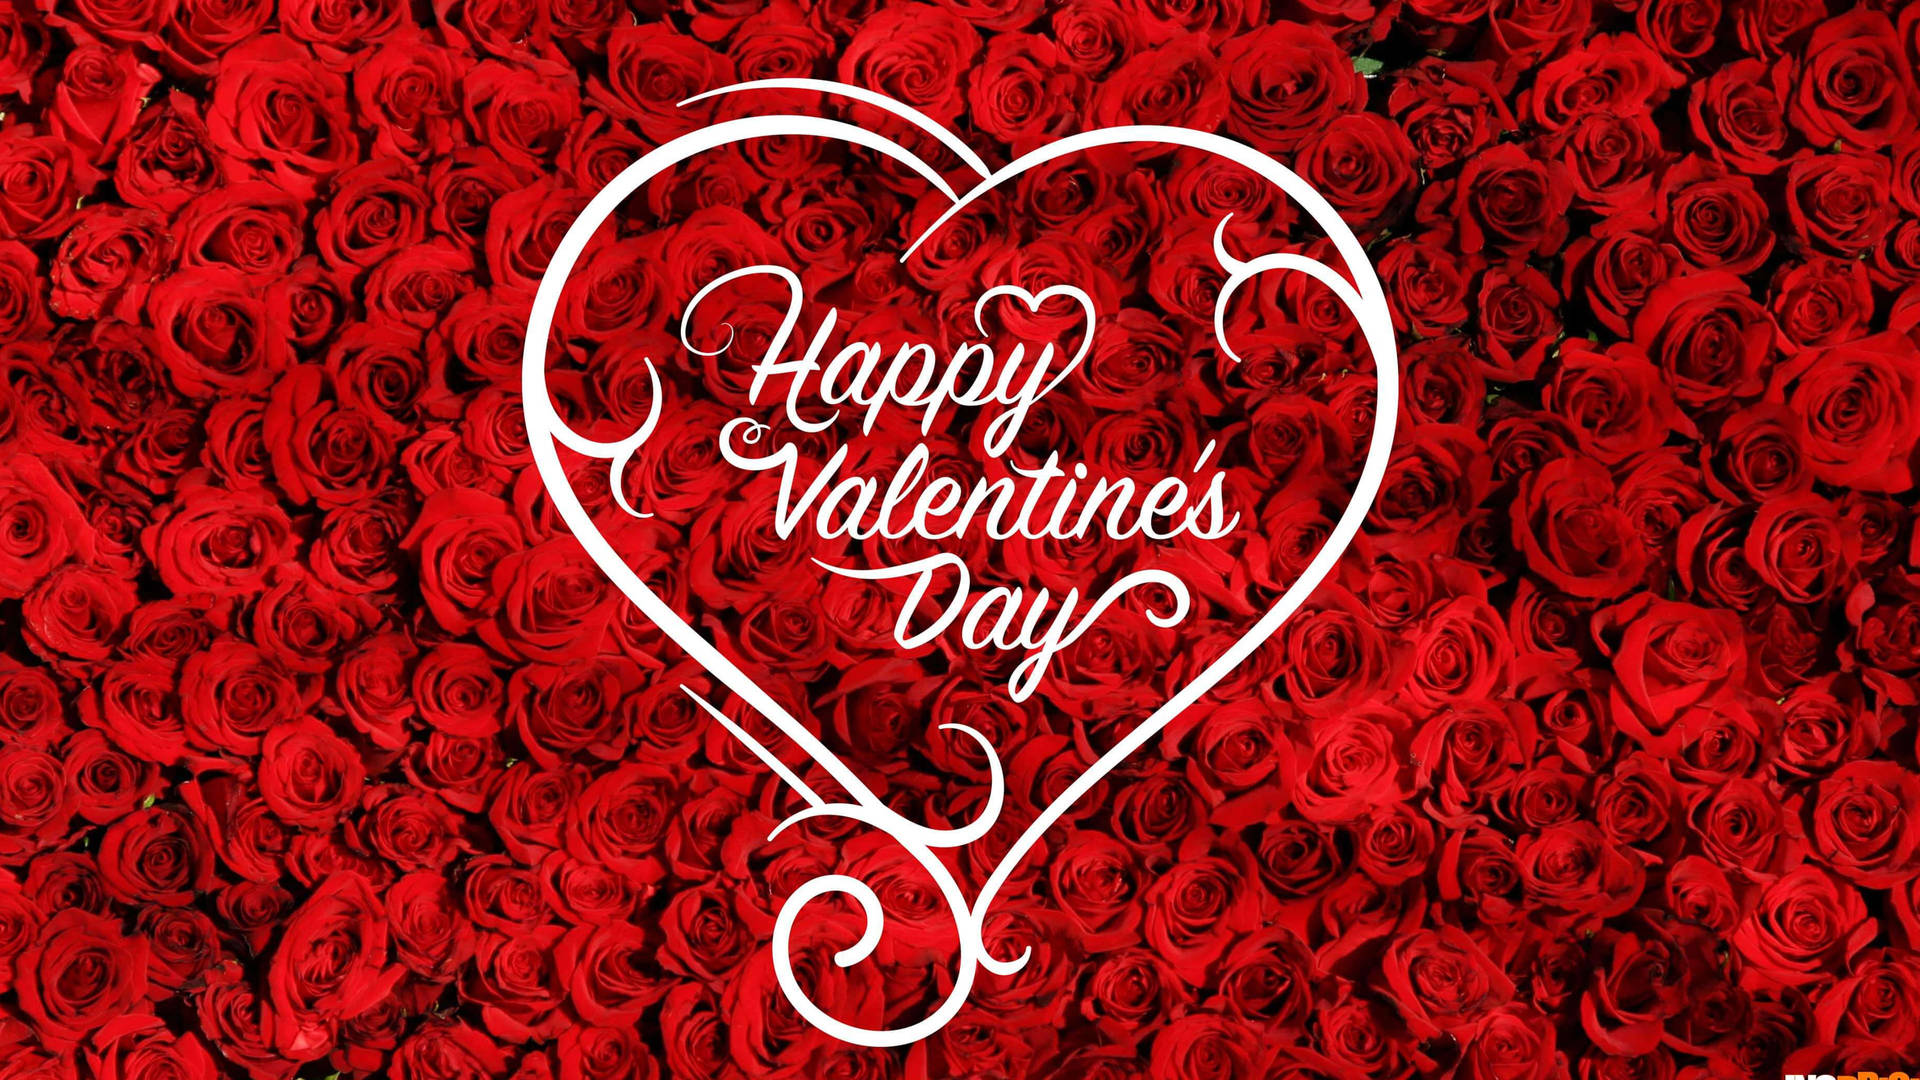 Happy Valentine’s Day Red Roses Desktop